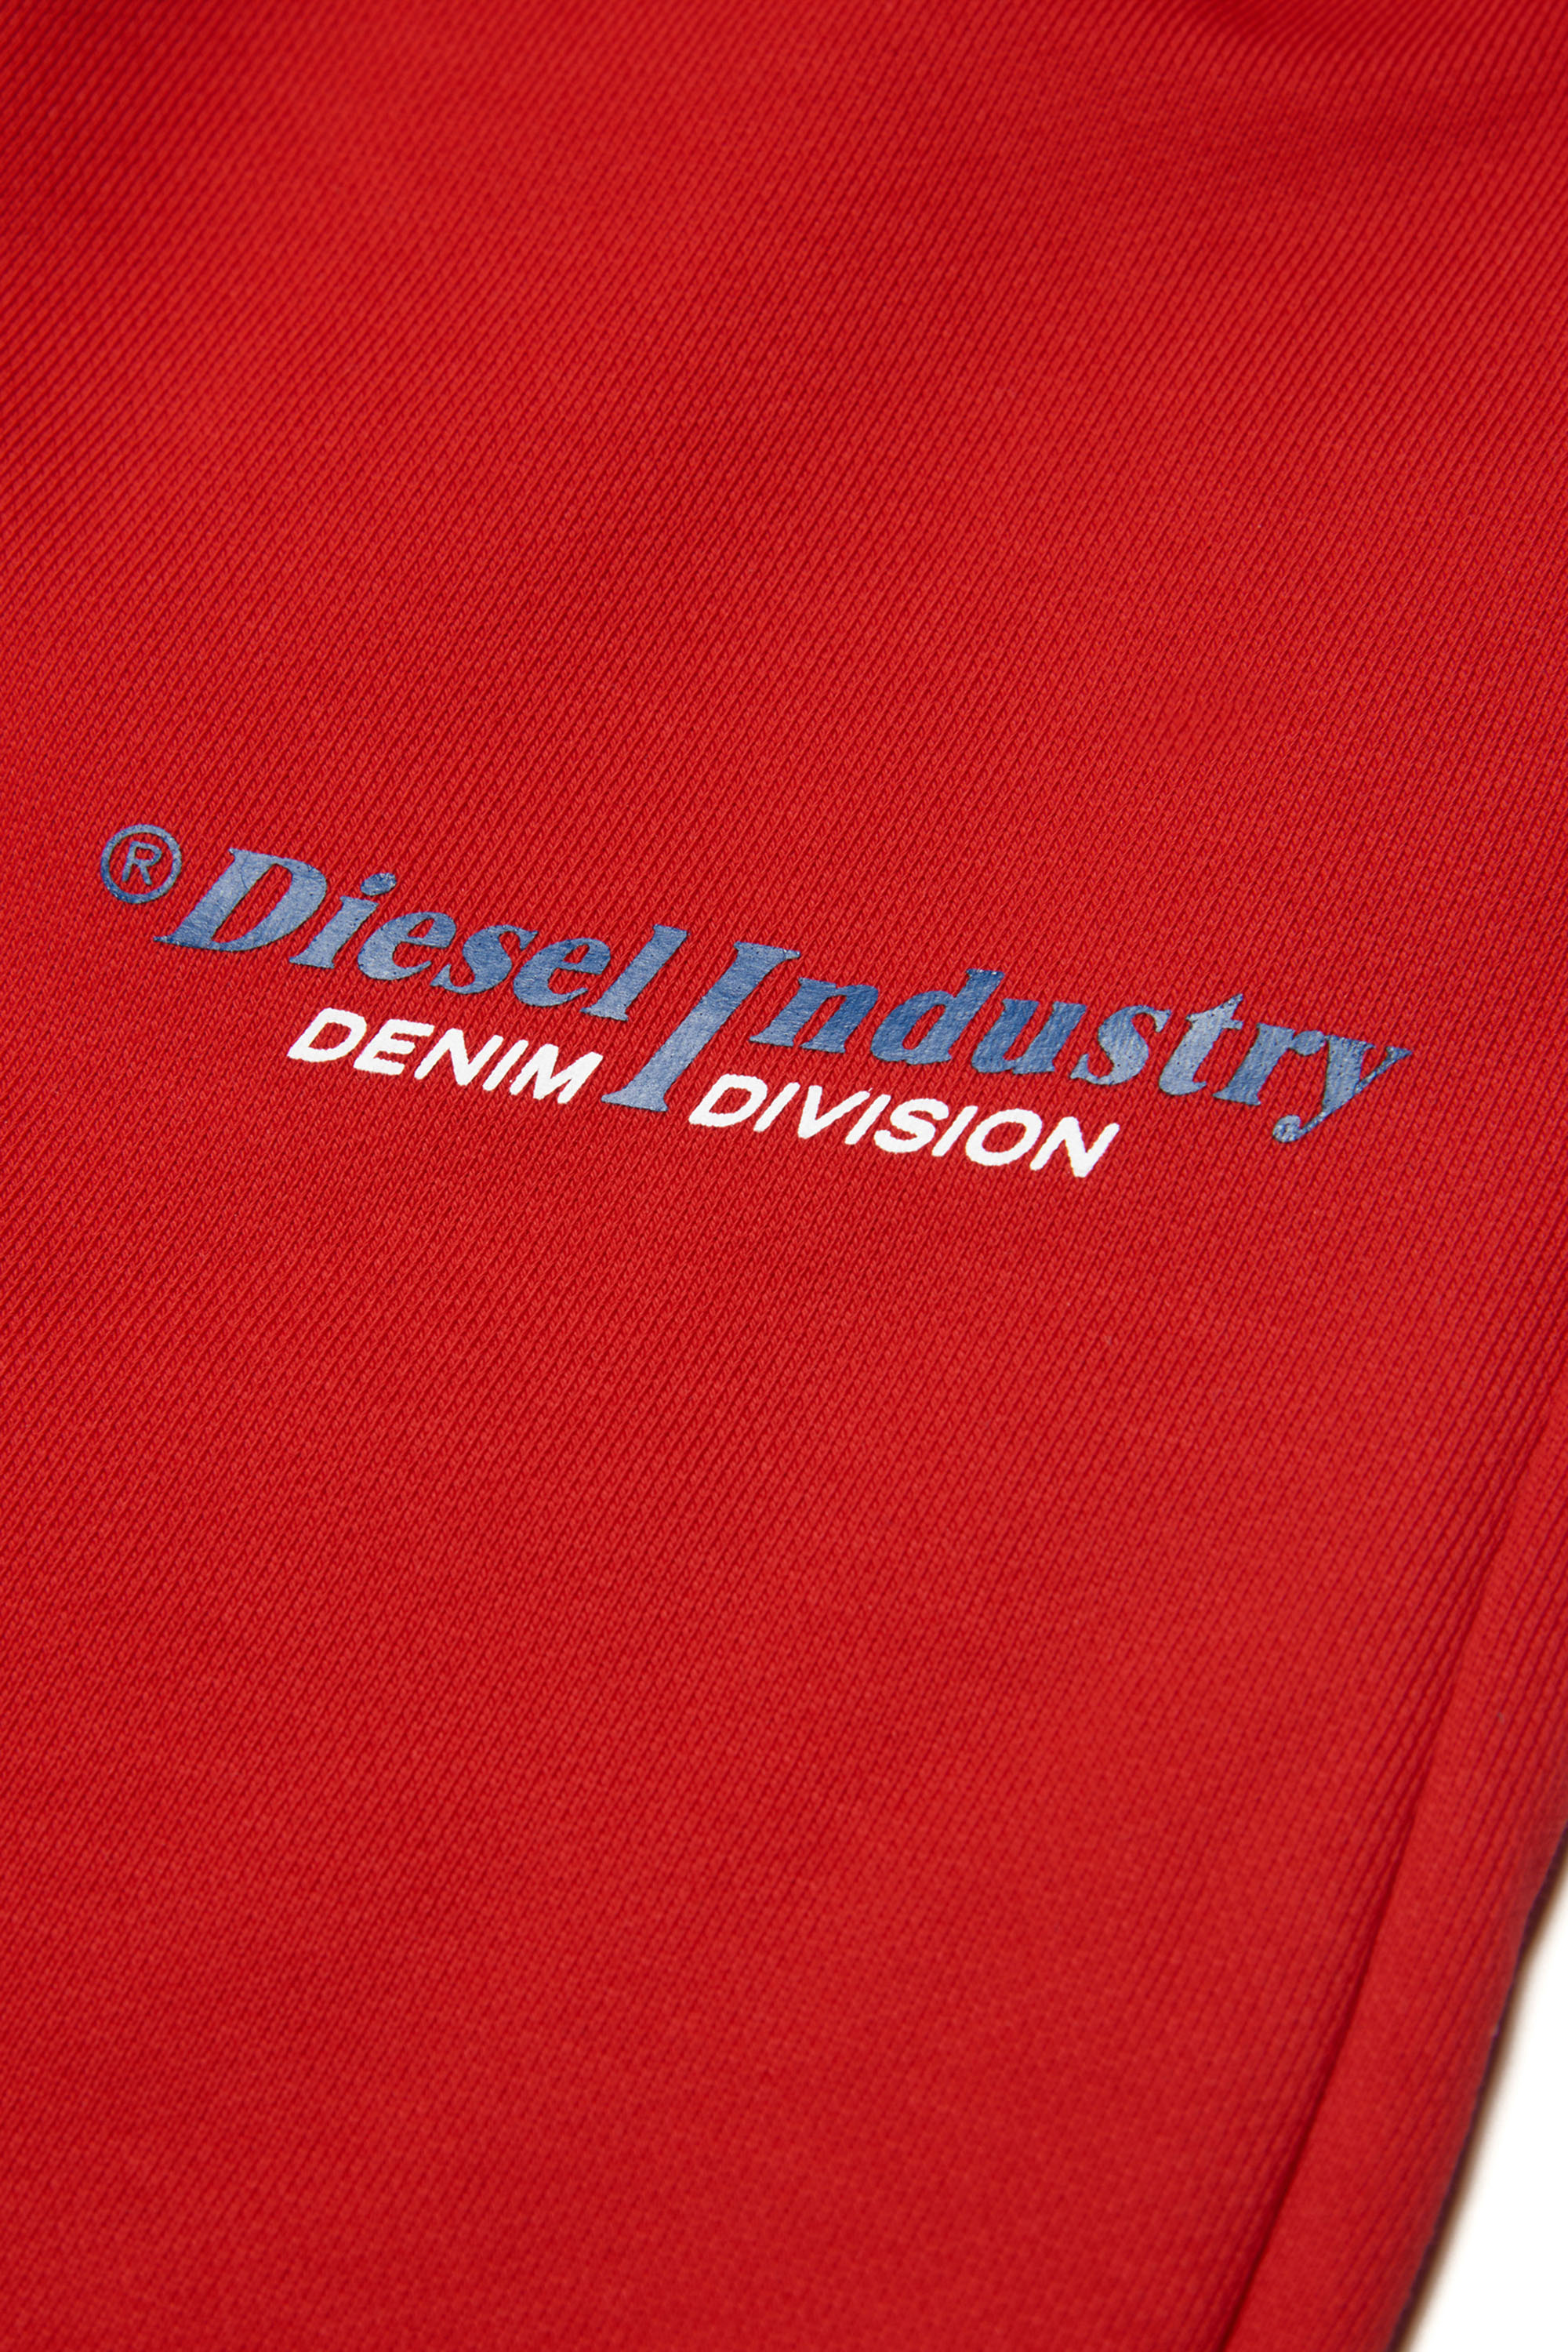 Diesel - PVENUSIND, Rosso - Image 3